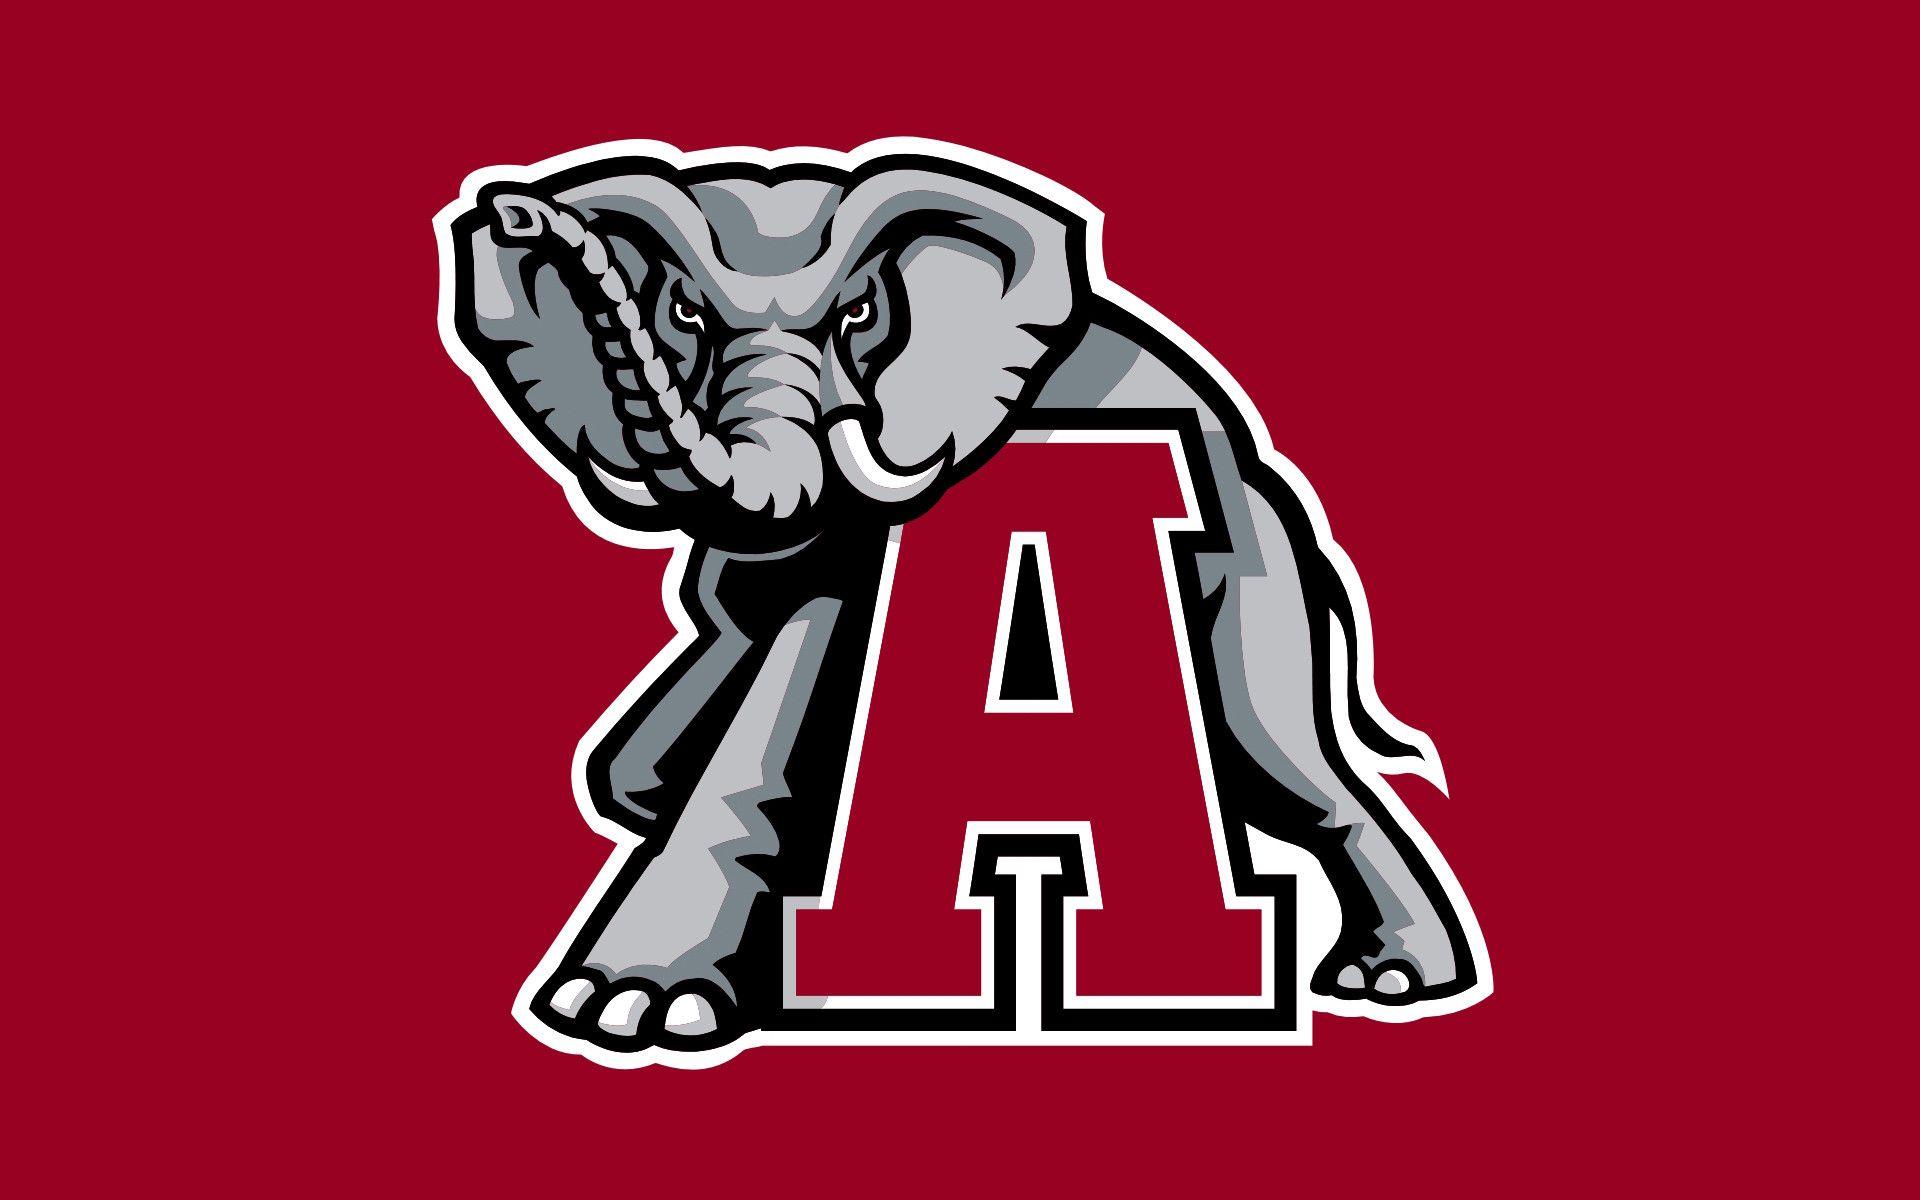 Elephant Alabama Football Logo Wallpapers in High Quality